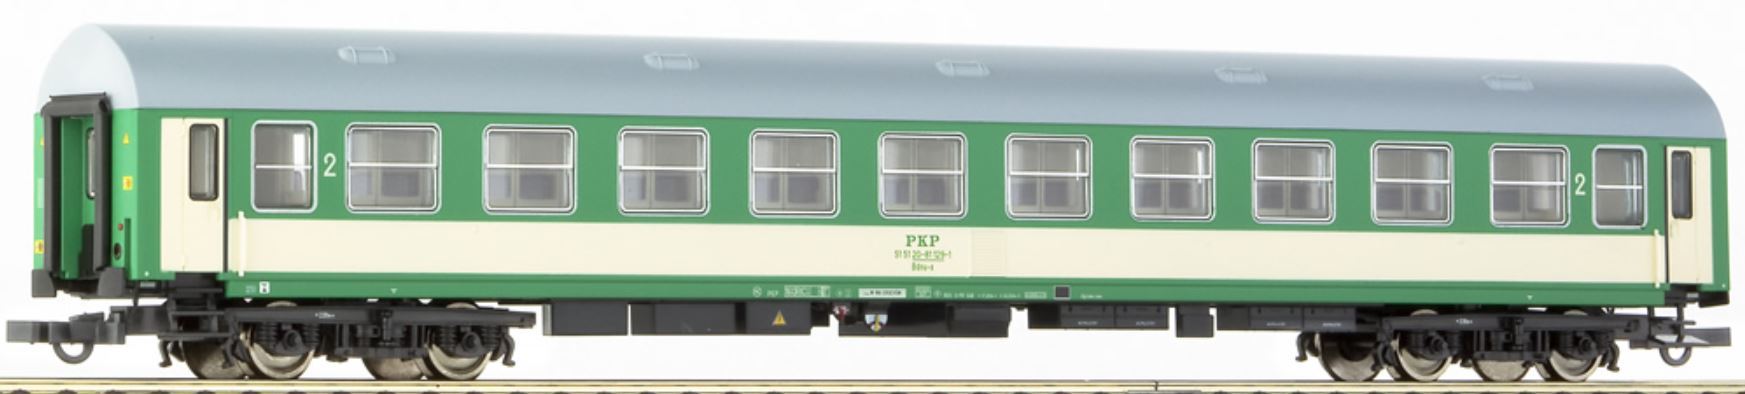 Roco 64818 H0 2nd Class Passenger Car, PKP